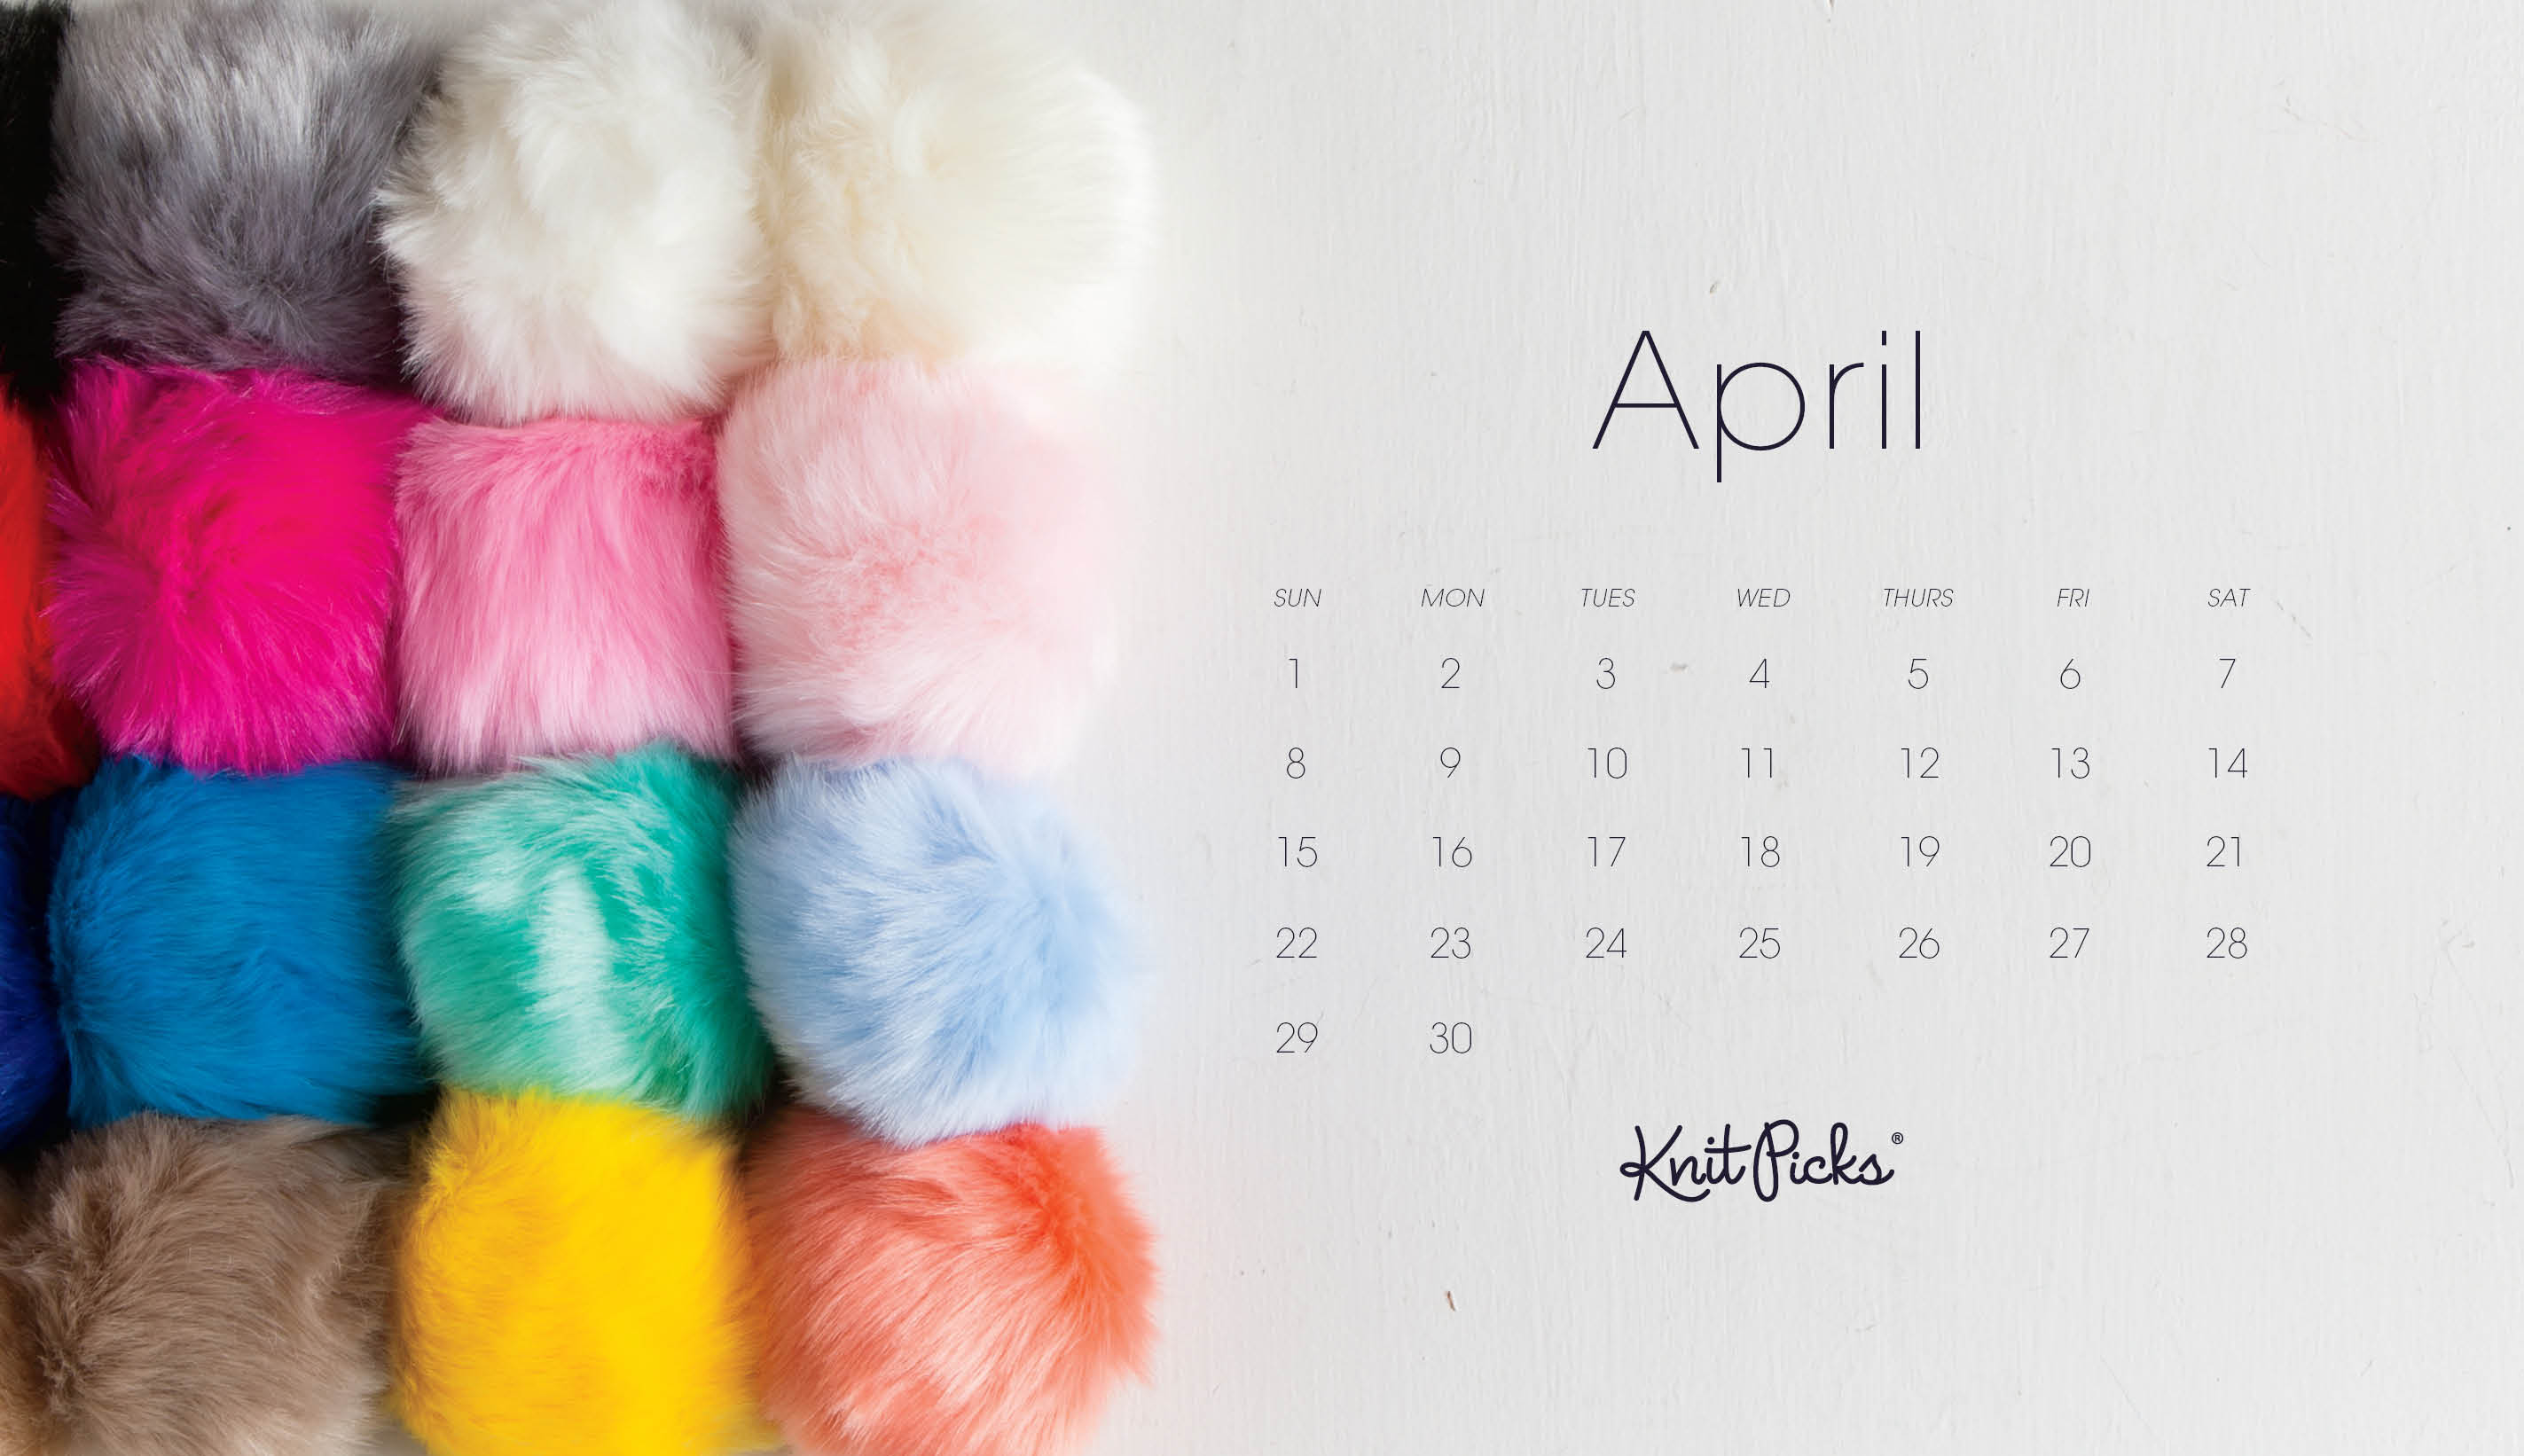 free-downloadable-april-2018-calendar-knitpicks-staff-knitting-blog